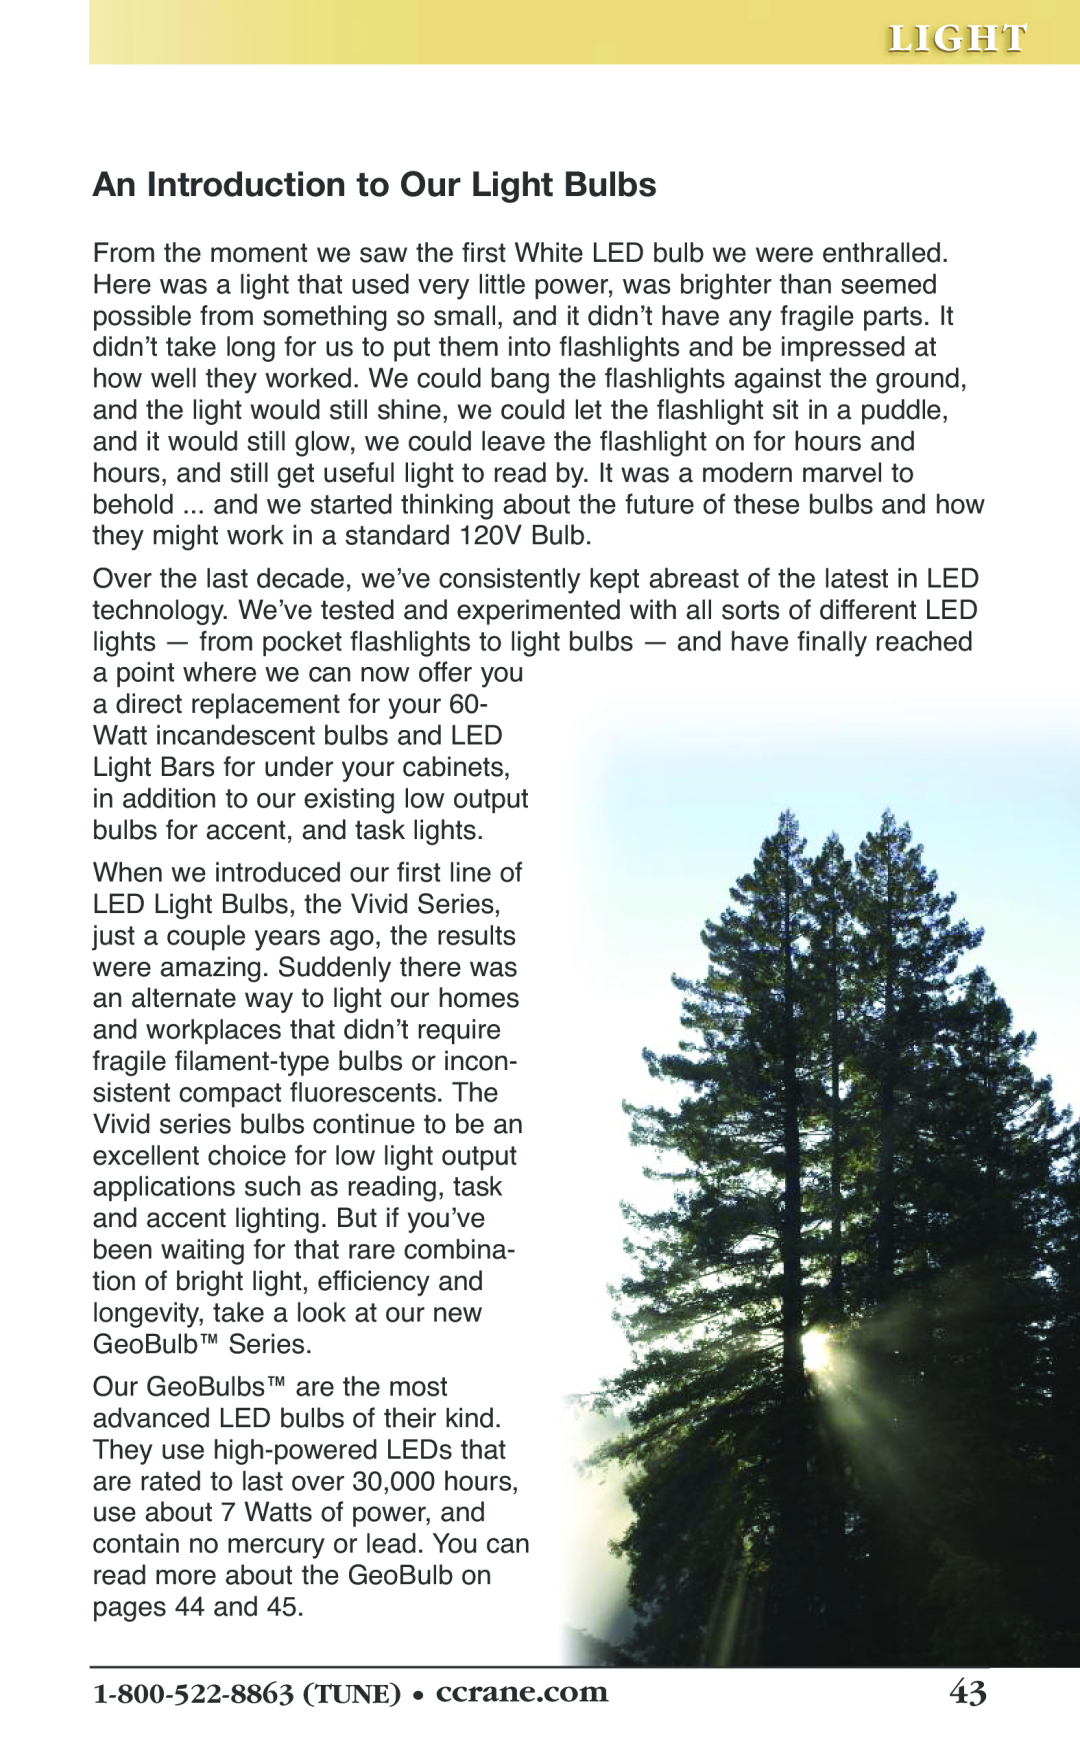 C. Crane 19f manual Li Ght, An Introduction to Our Light Bulbs, 1-800-522-8863TUNE • ccrane.com 